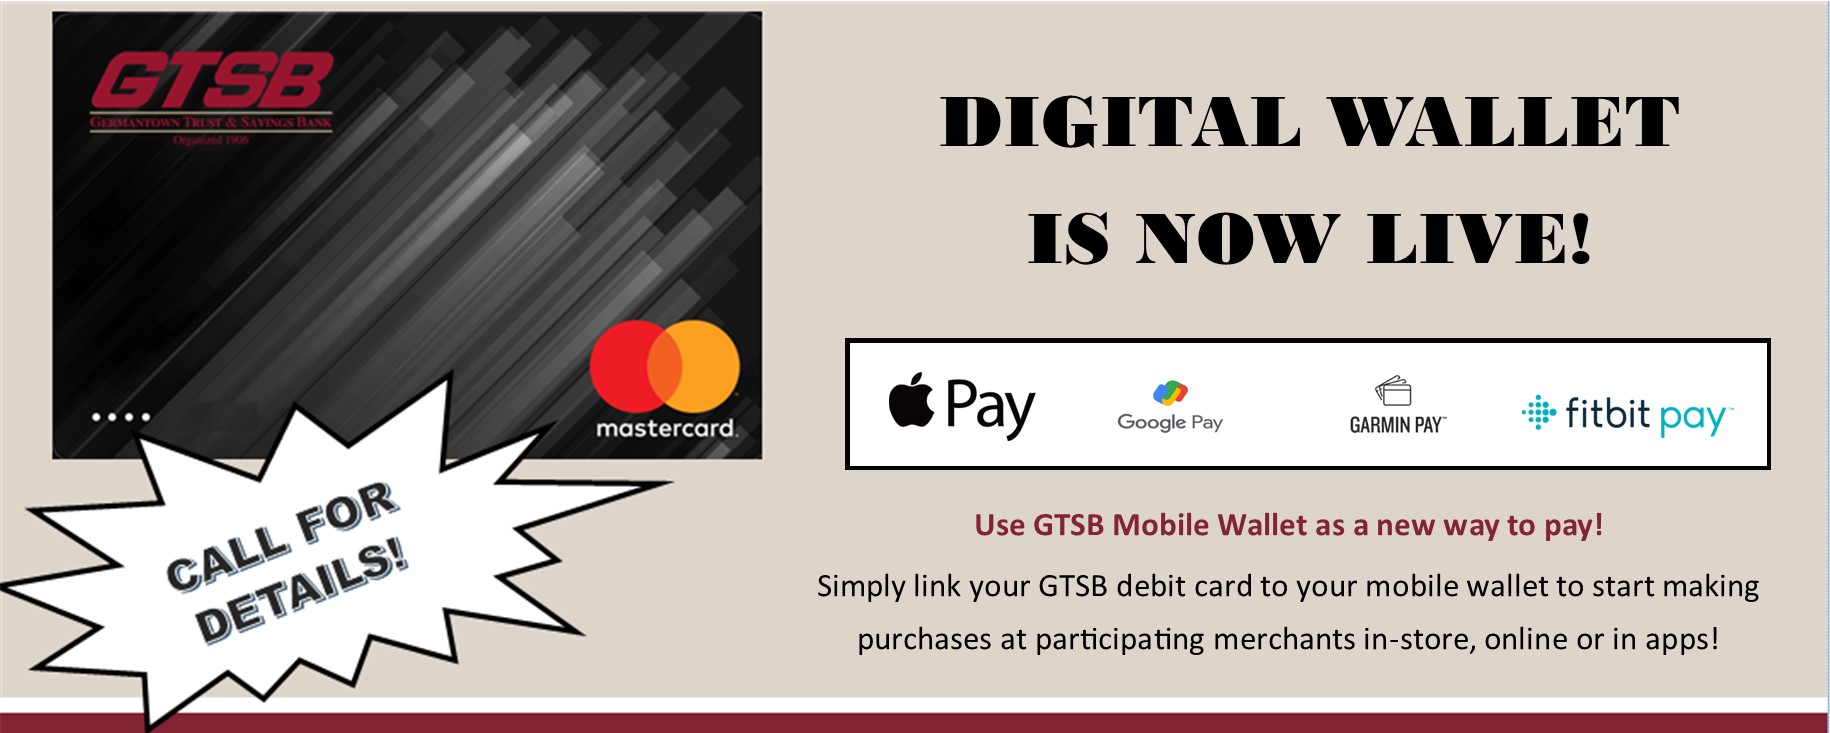 Digital Wallet Now Live